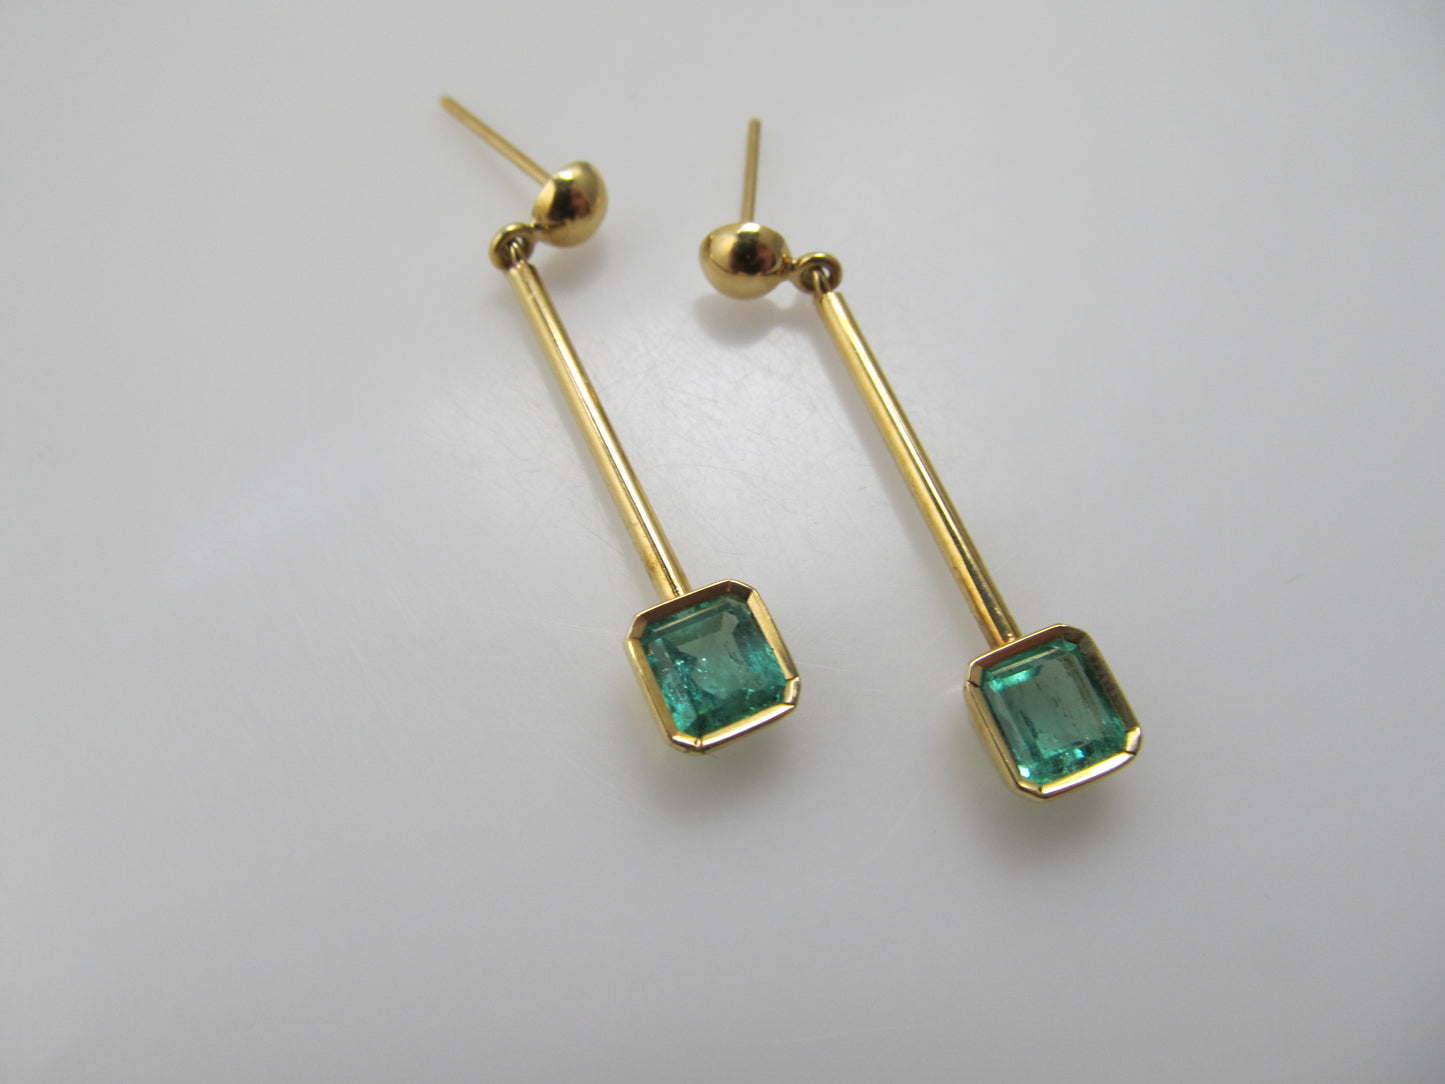 1ct natural emerald drop earrings